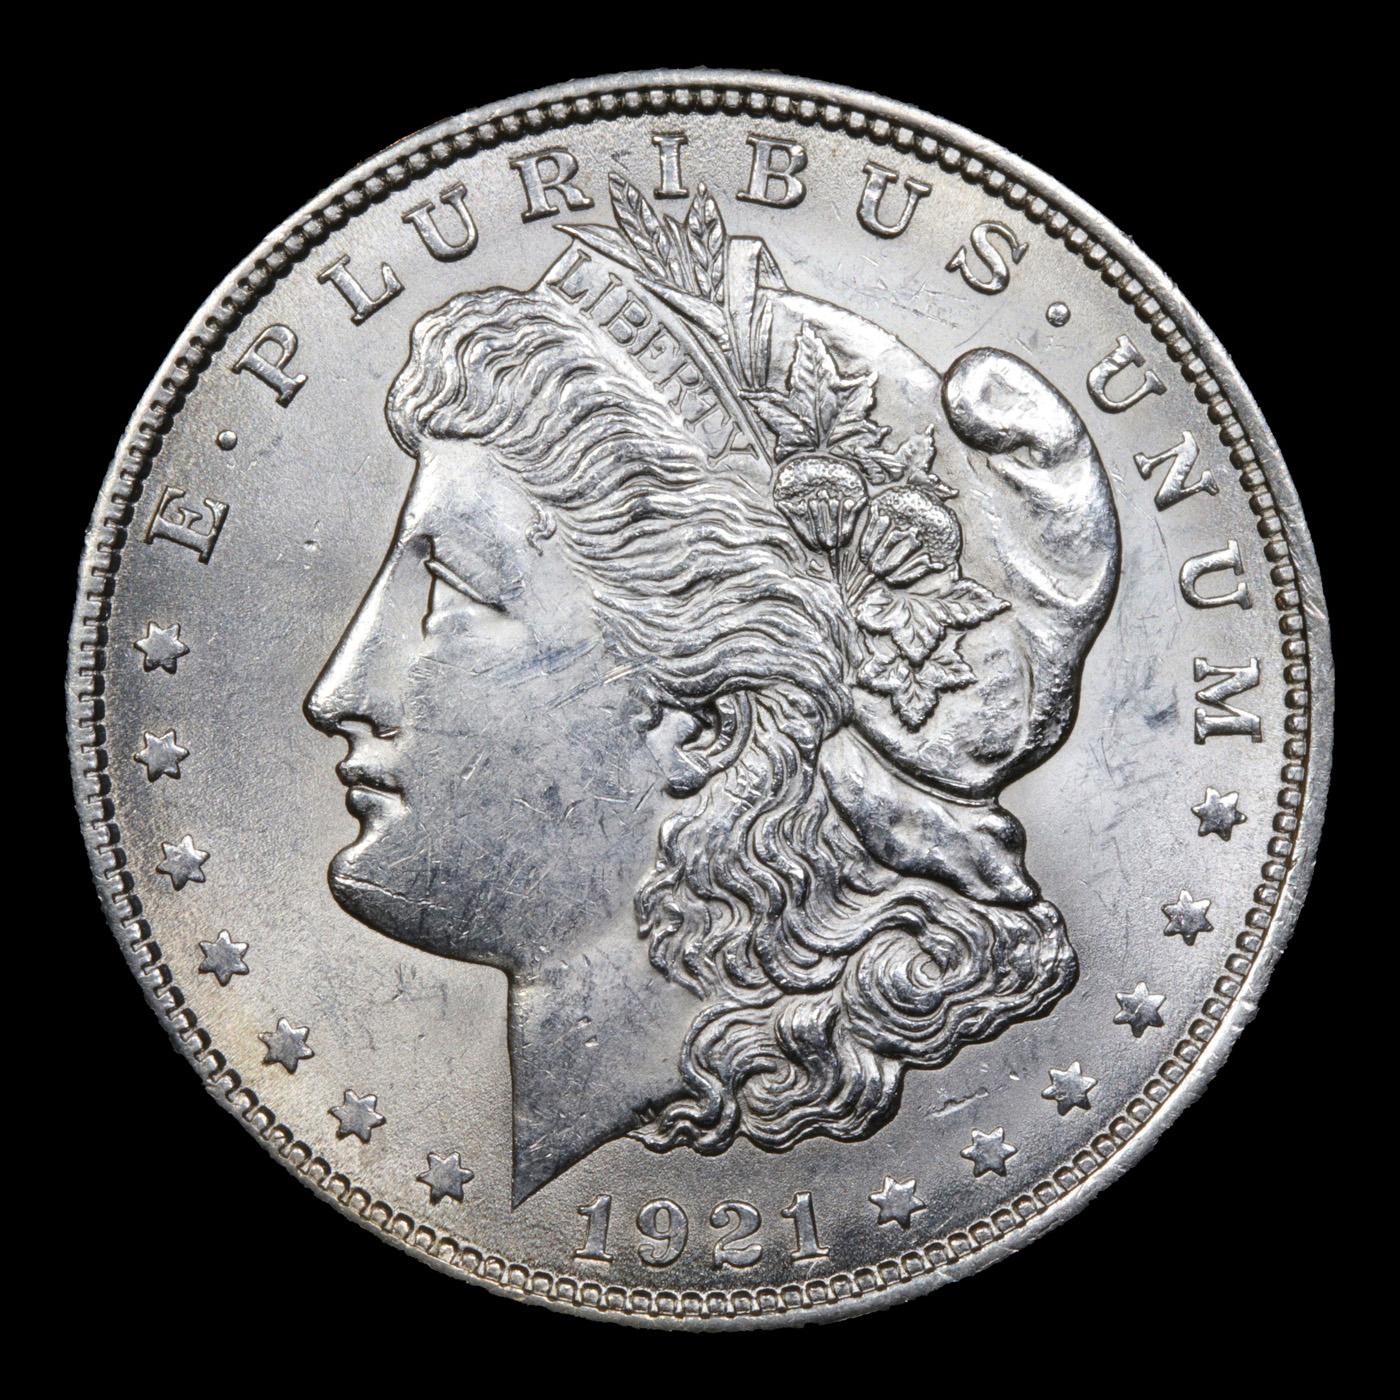 1921-p Morgan Dollar $1 Grades BU+